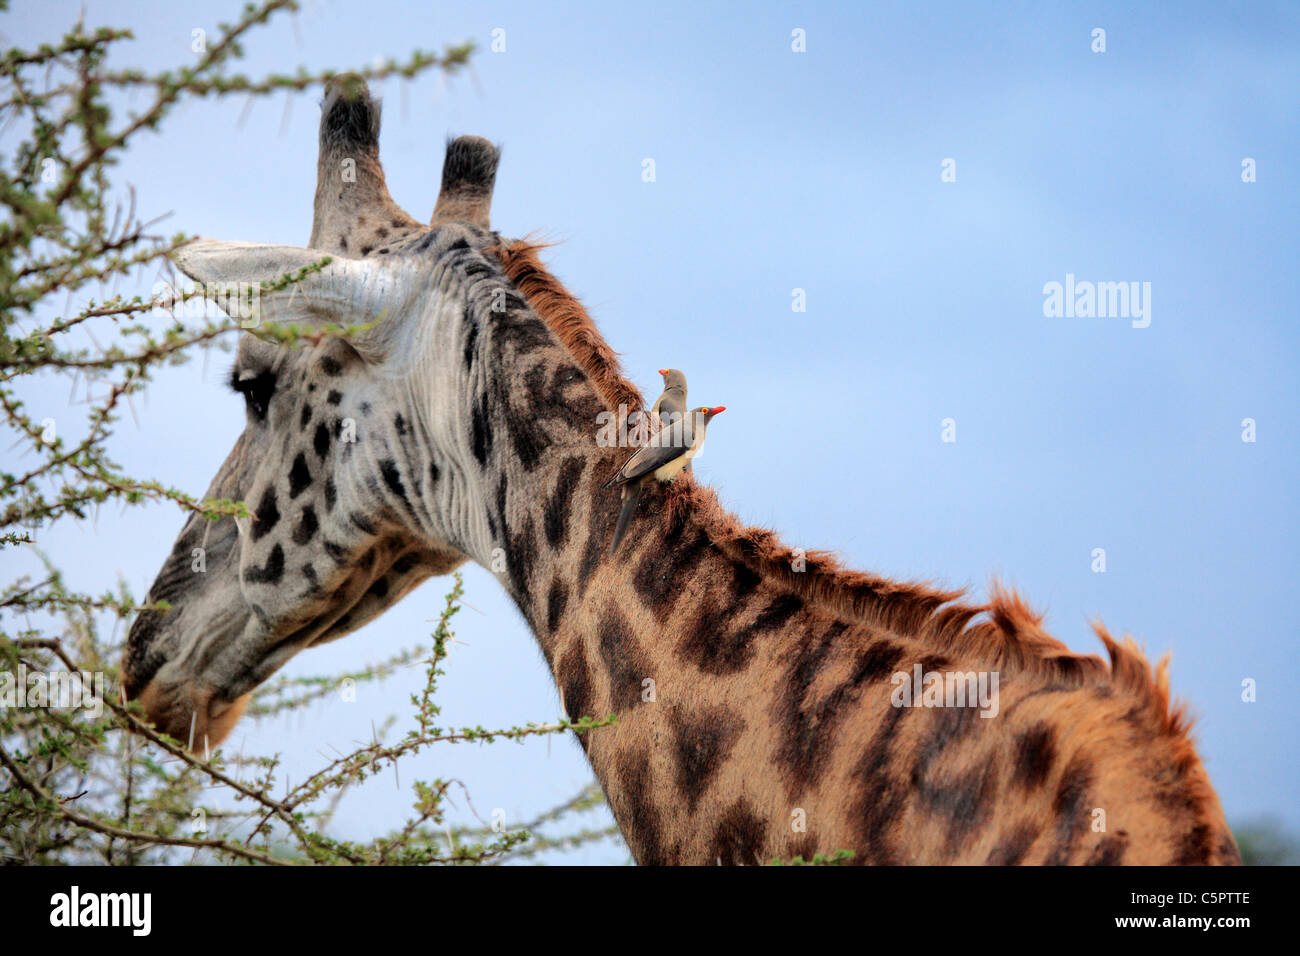 Giraffa camelopardalis (la jirafa), Parque Nacional de Serengueti, Tanzania Foto de stock